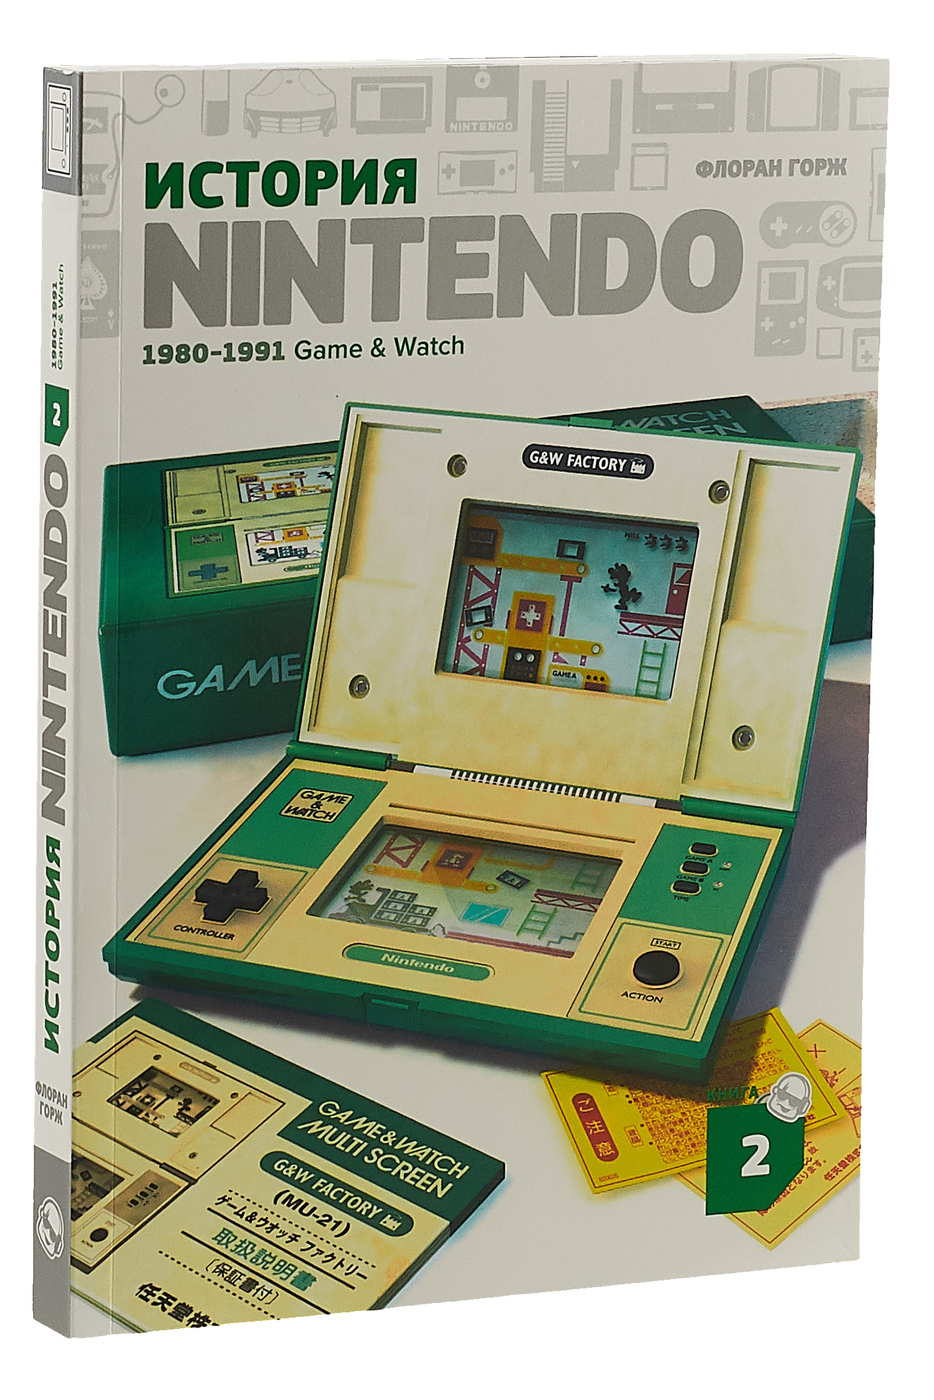 История nintendo. Нинтендо 1980. История Nintendo книга 2 1980-1991 game watch. История Нинтендо. История Nintendo книга.